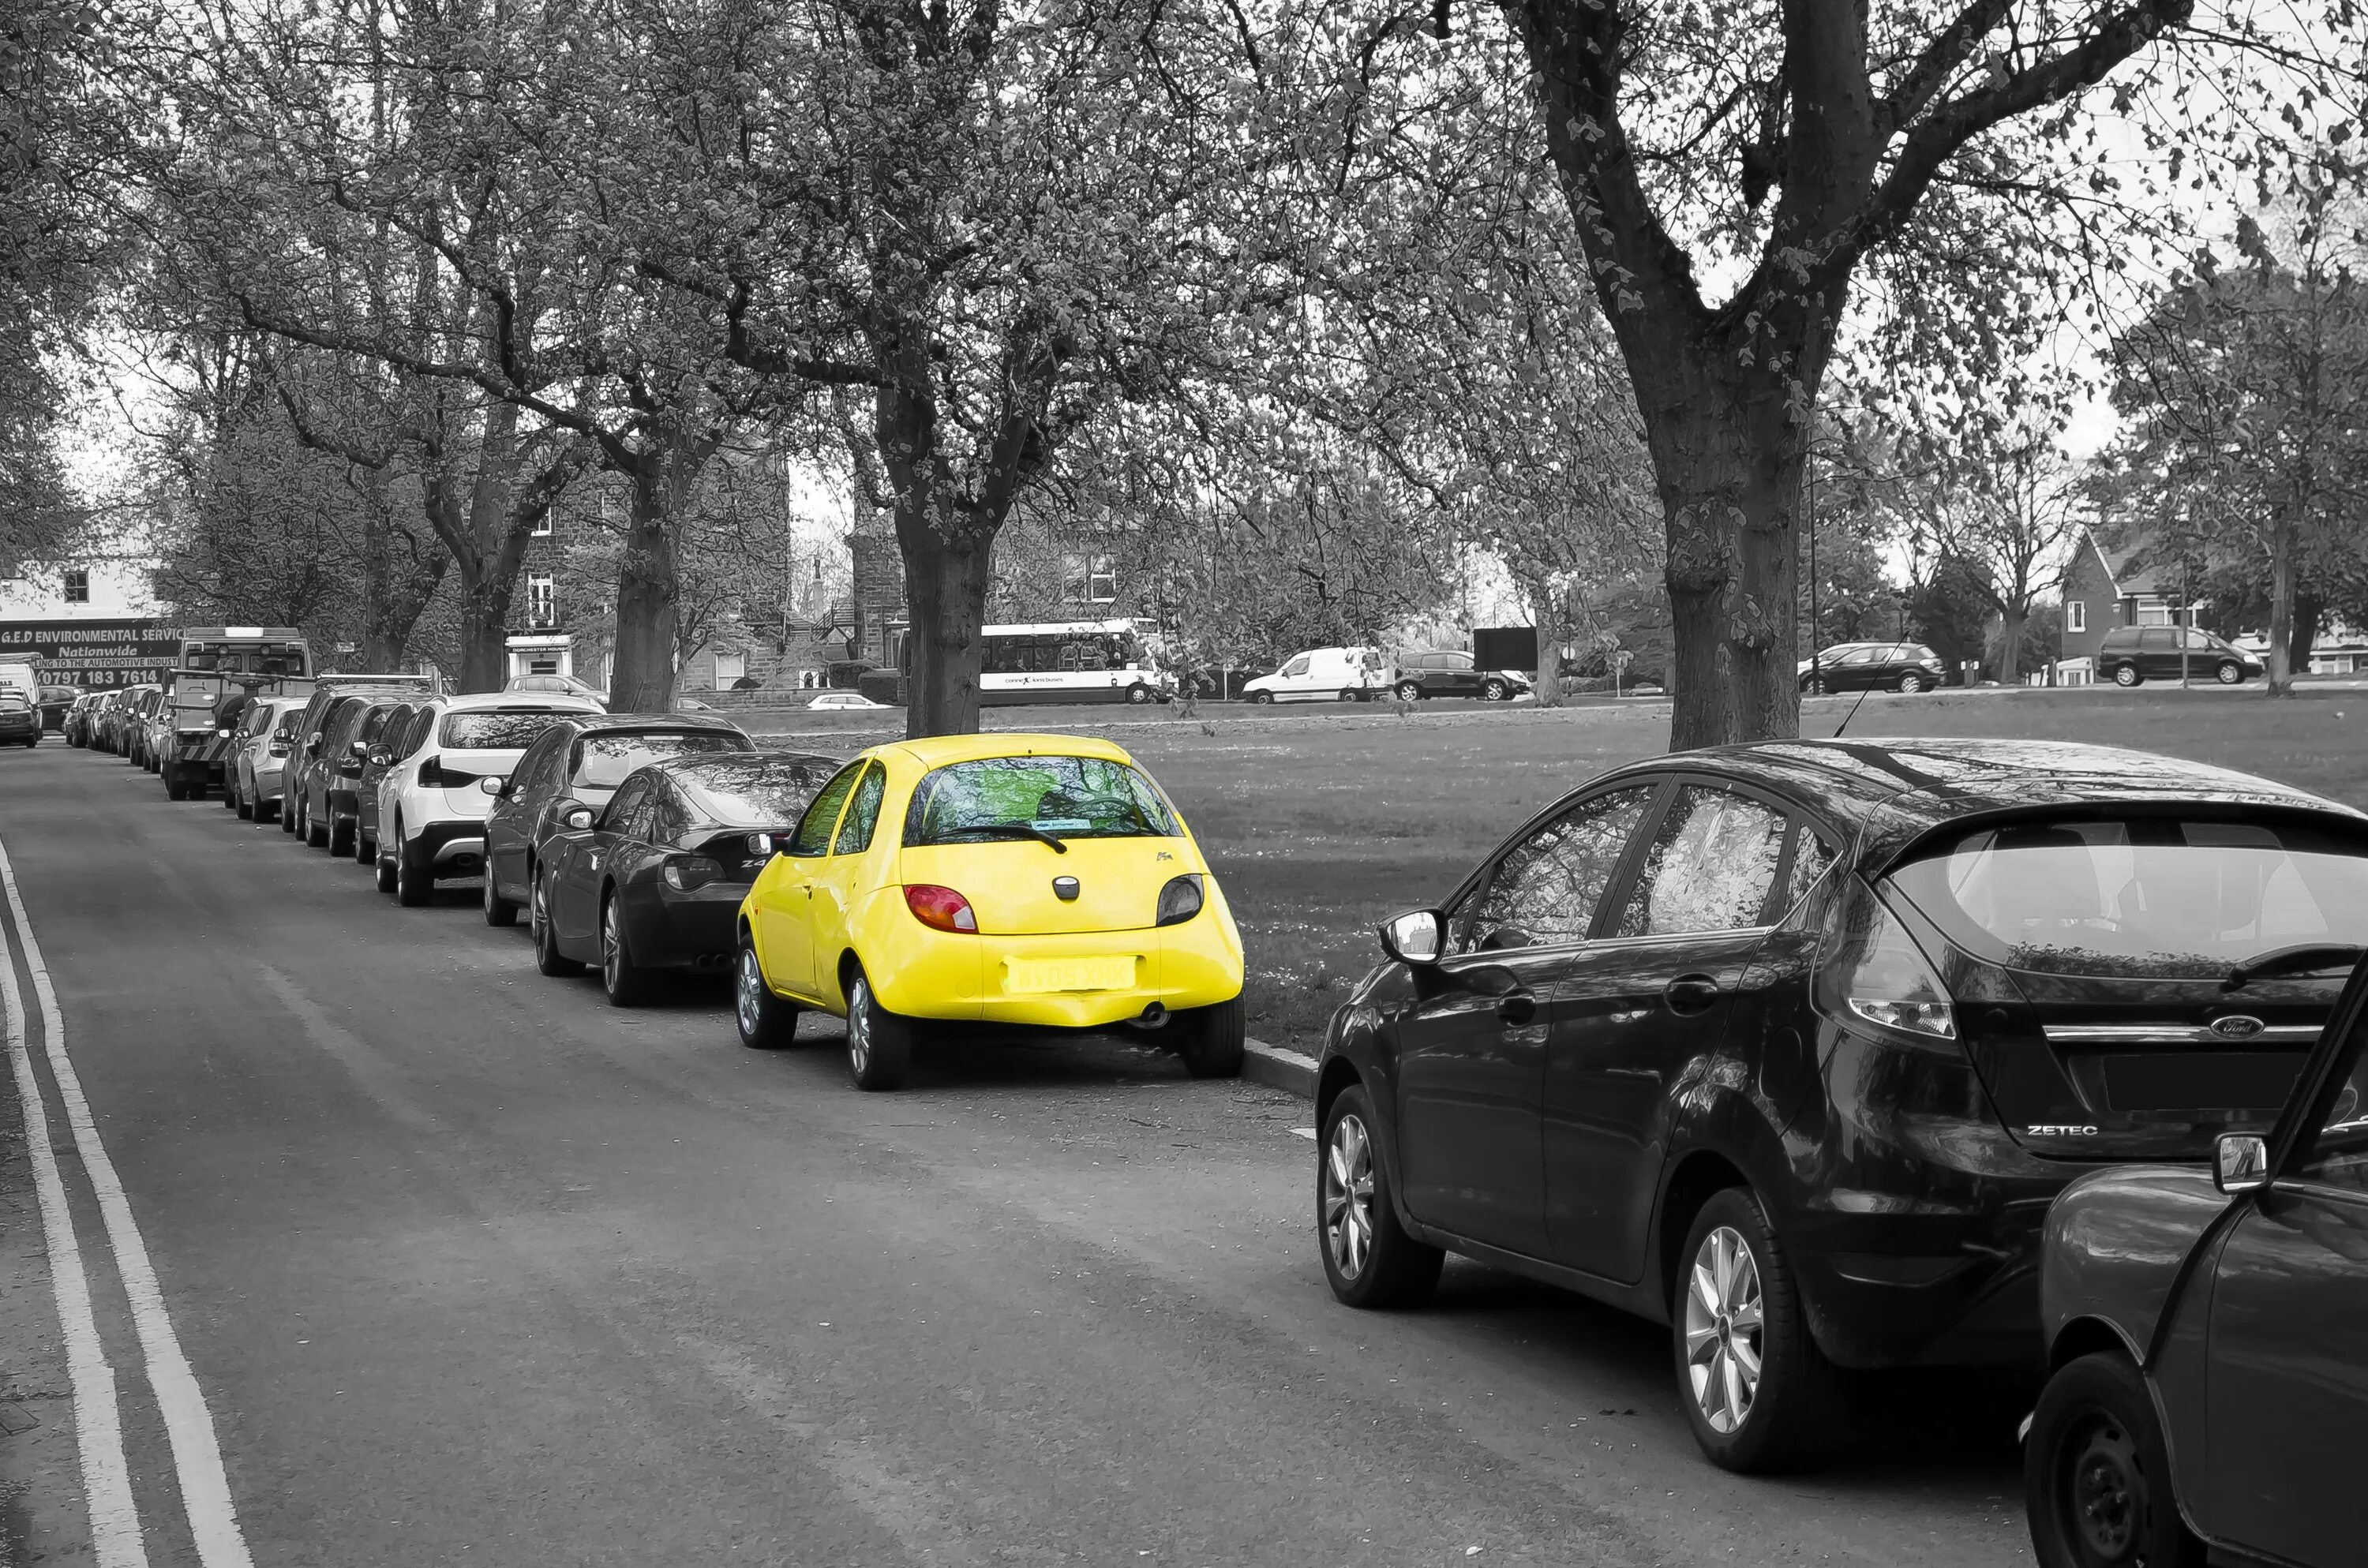 Включи машина на улице. Улица с припаркованными автомобилями. Машина на улице. Vfibuf YF EKWBT. Желтая машина на улице.